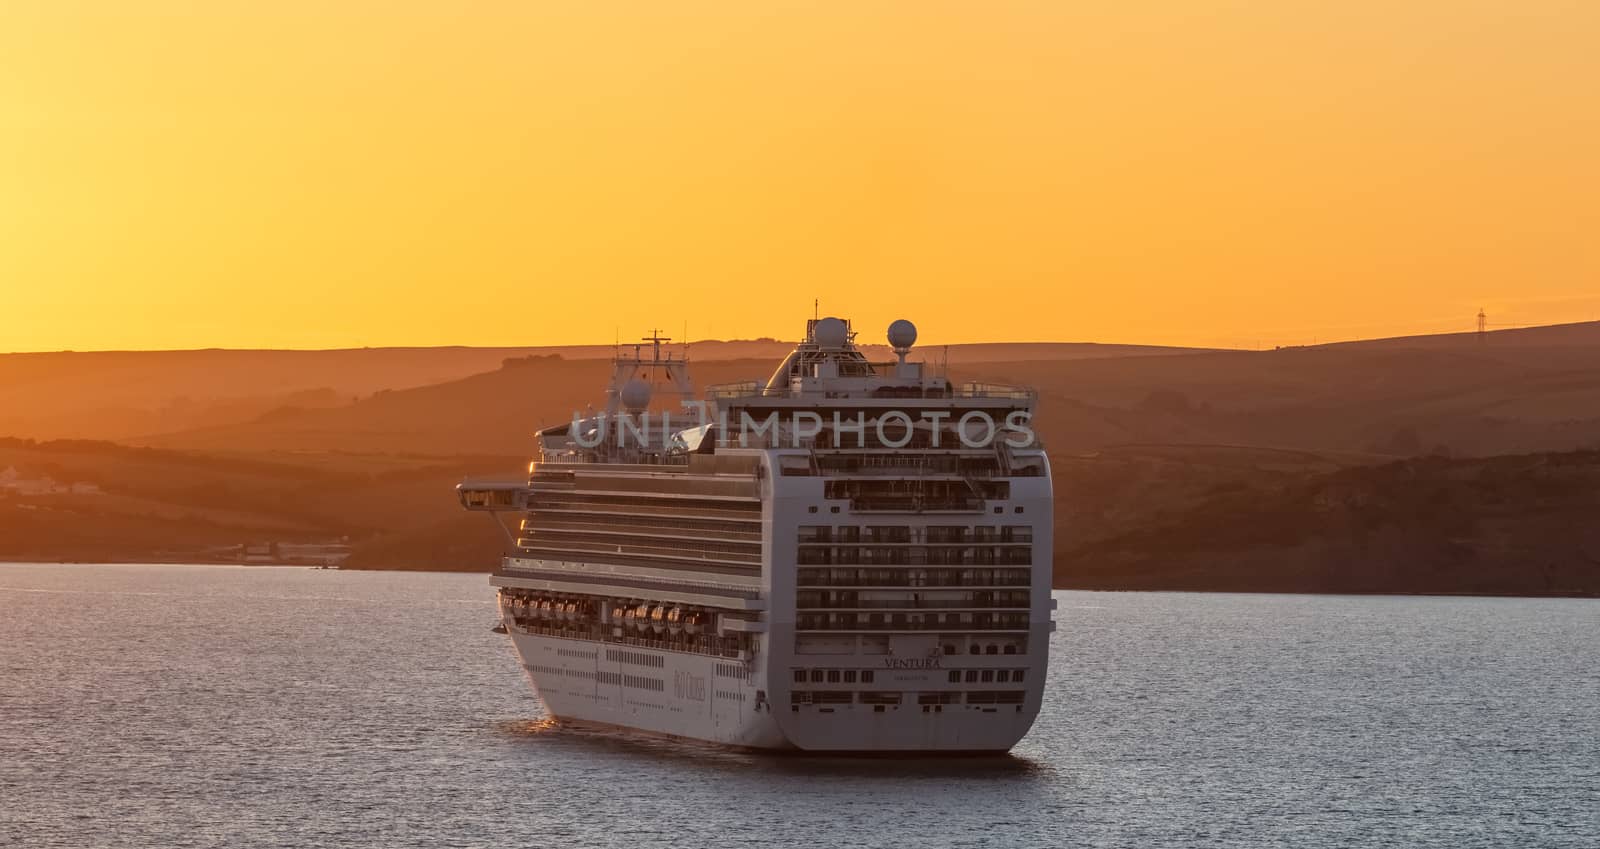 P&O cruise ship Ventura in Weymouth Bay by DamantisZ